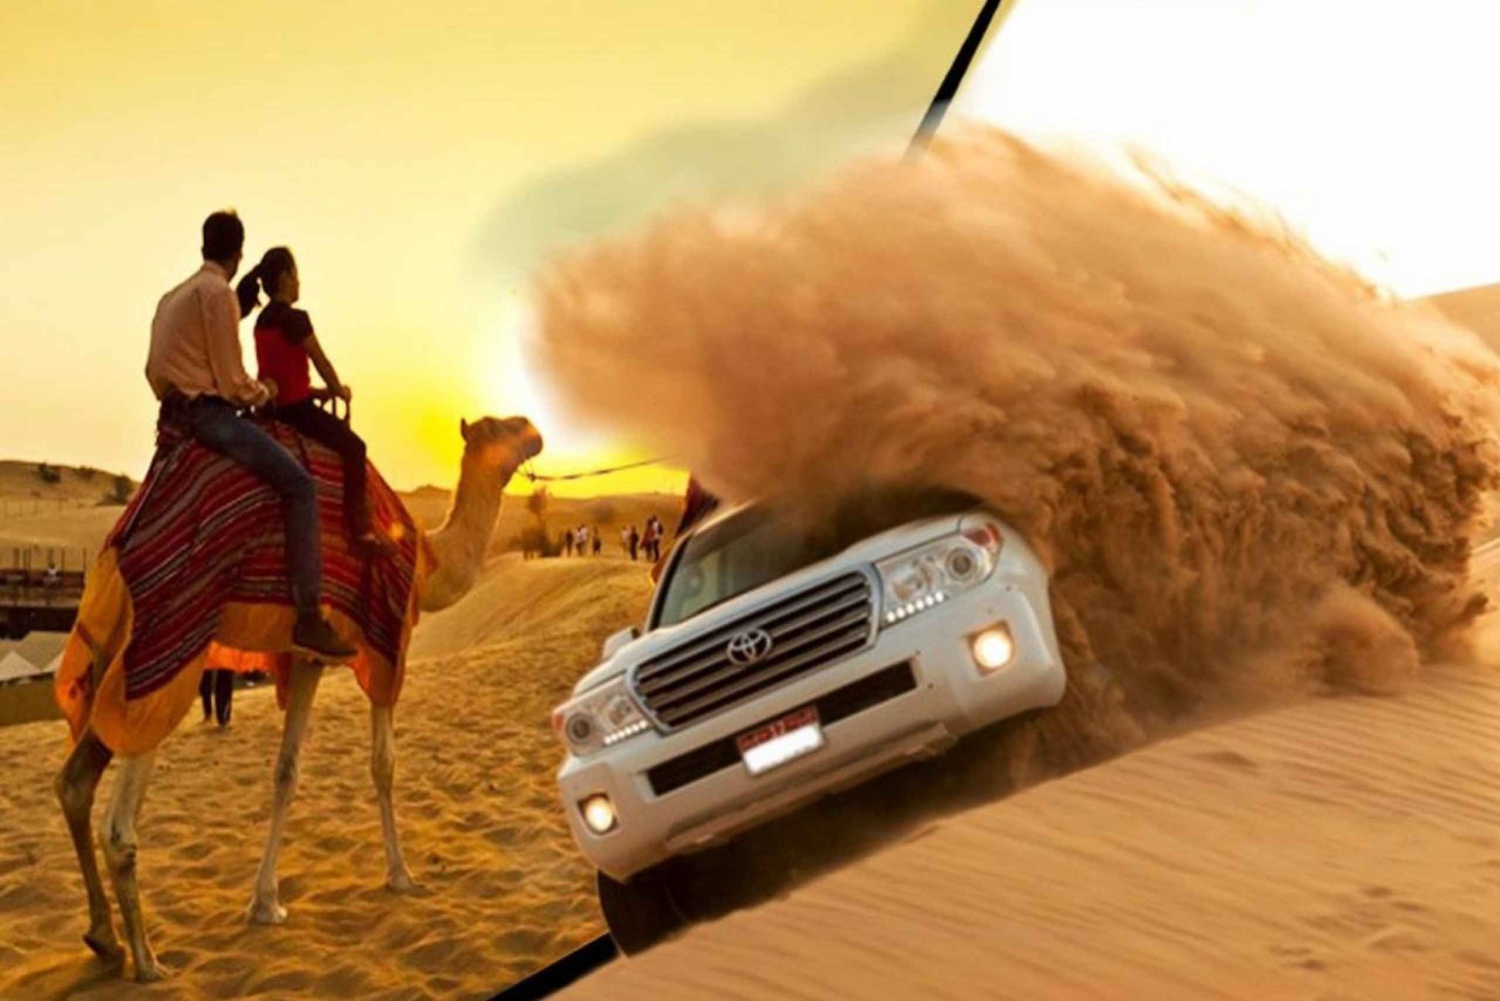 Dubai: Arabian Desert Safaris with BBQ, Camel Ride & More